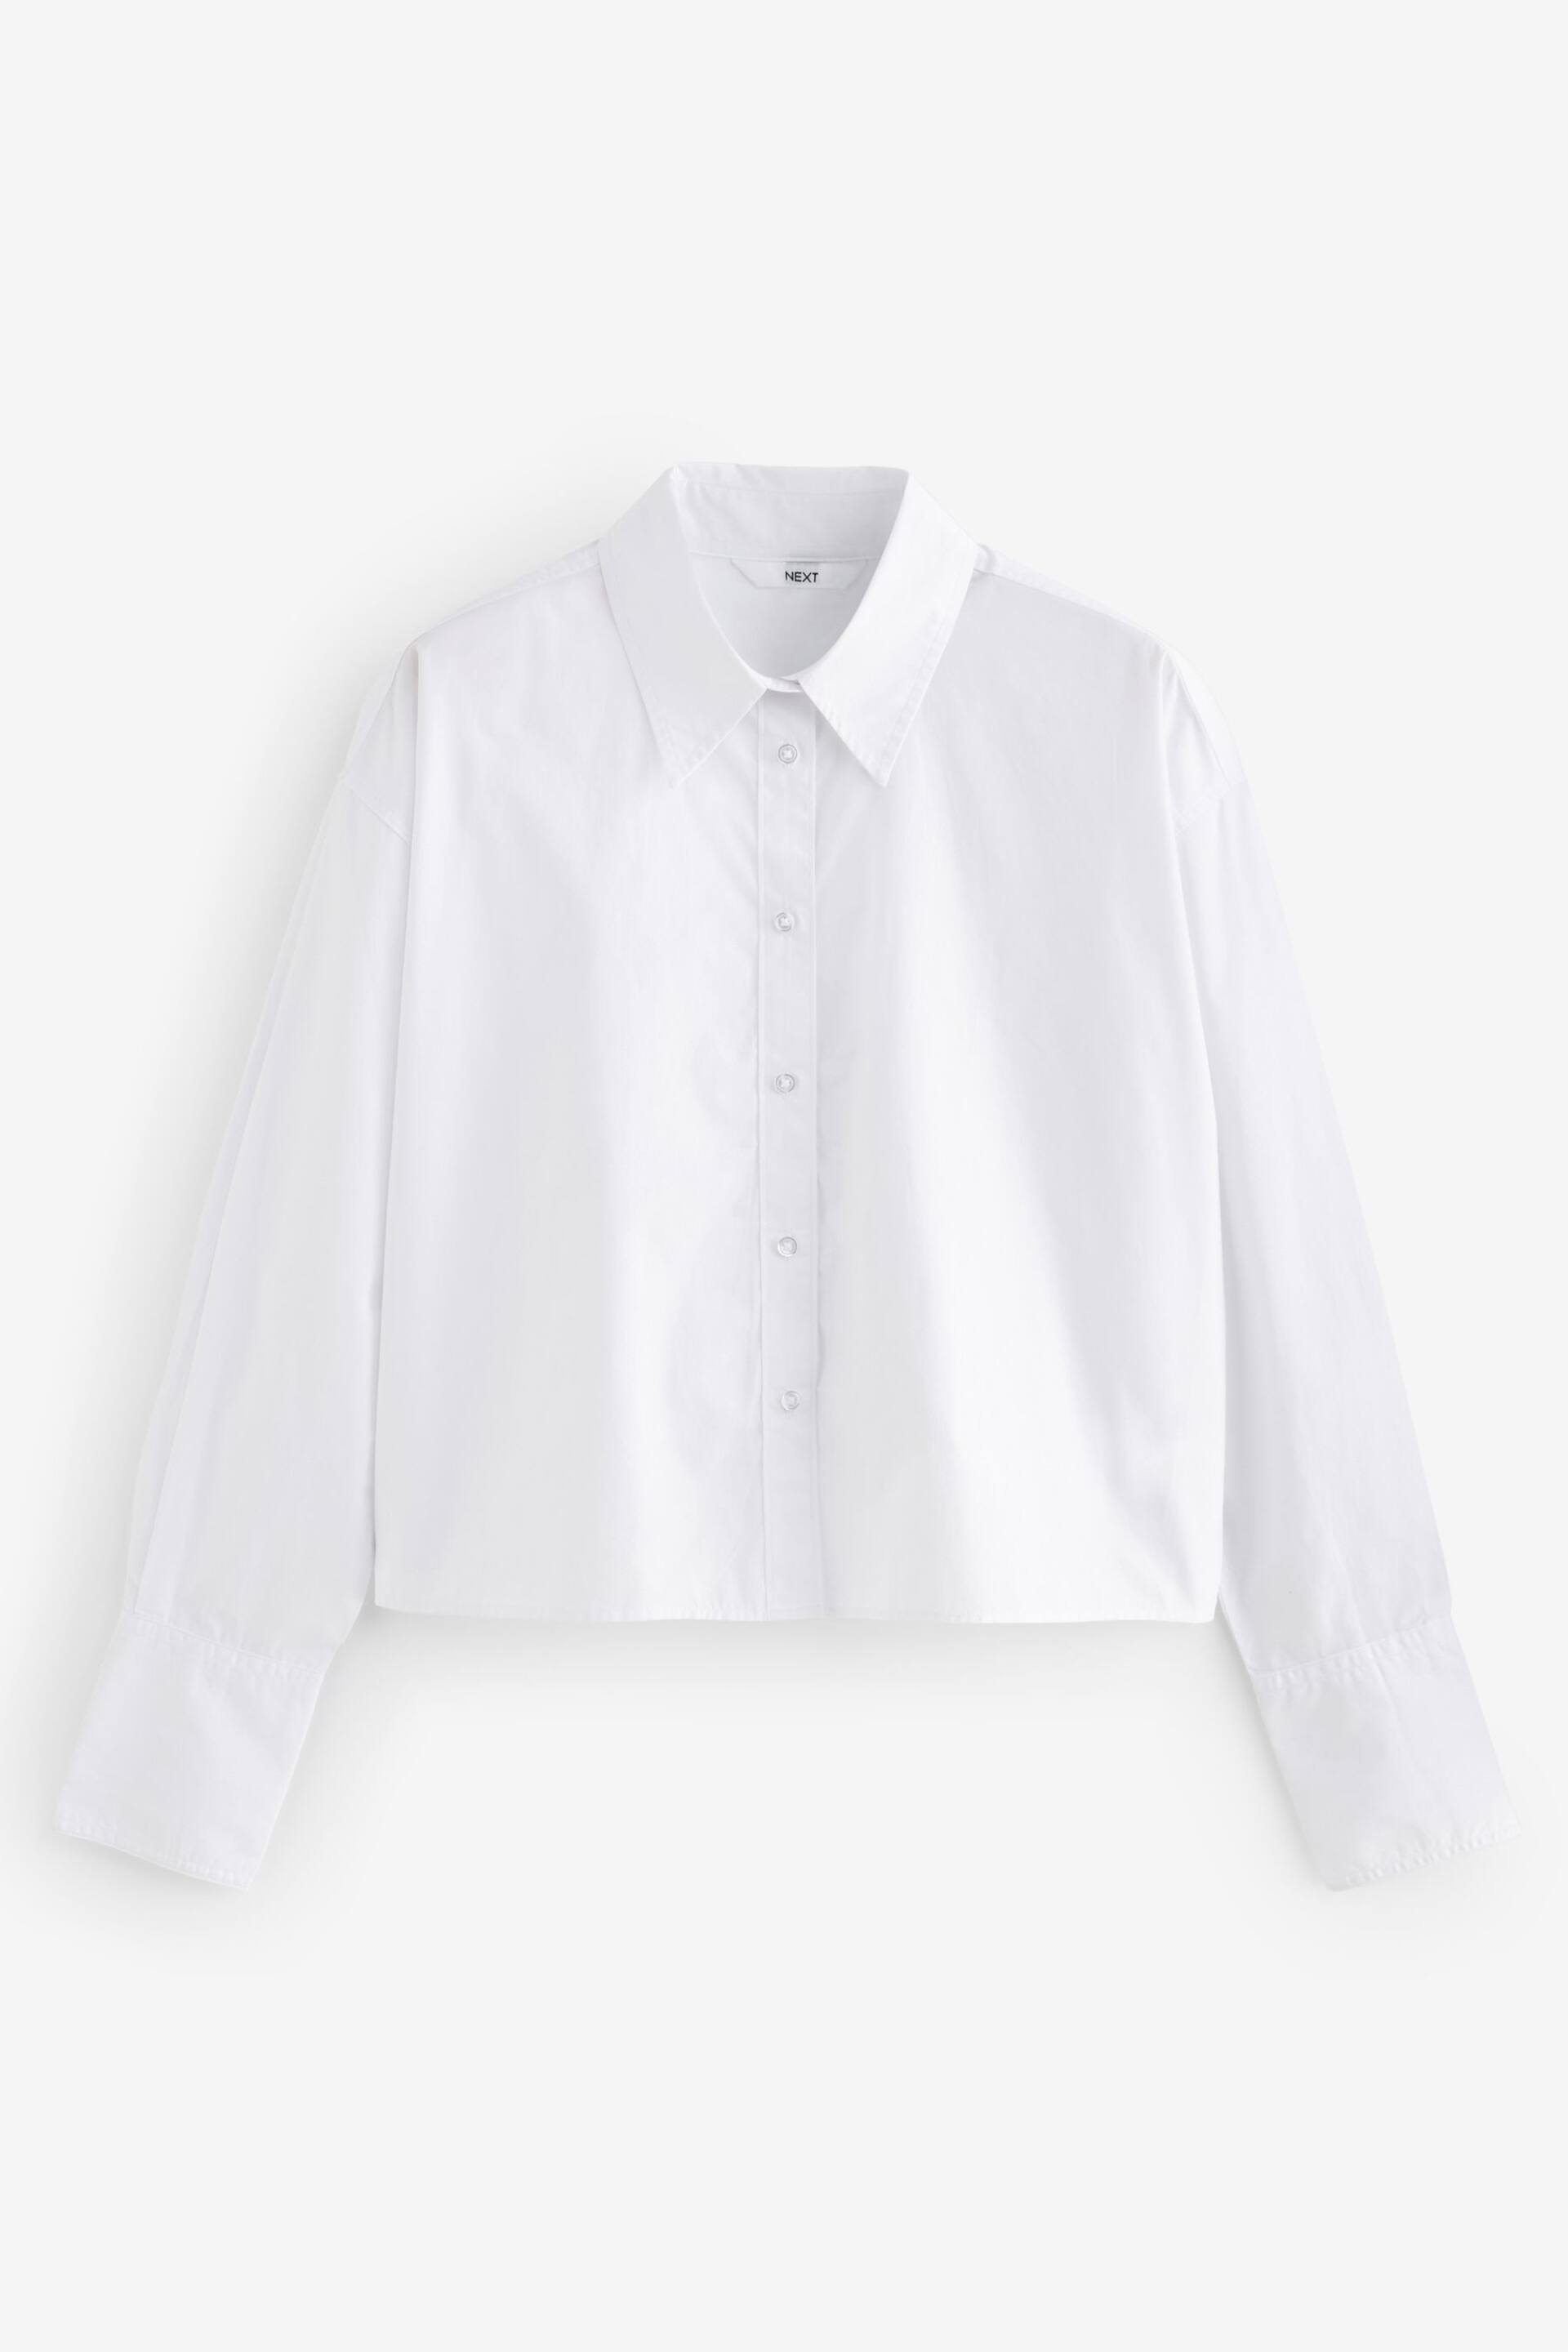 White Long Sleeve Cotton Cropped Shirt - Image 6 of 7